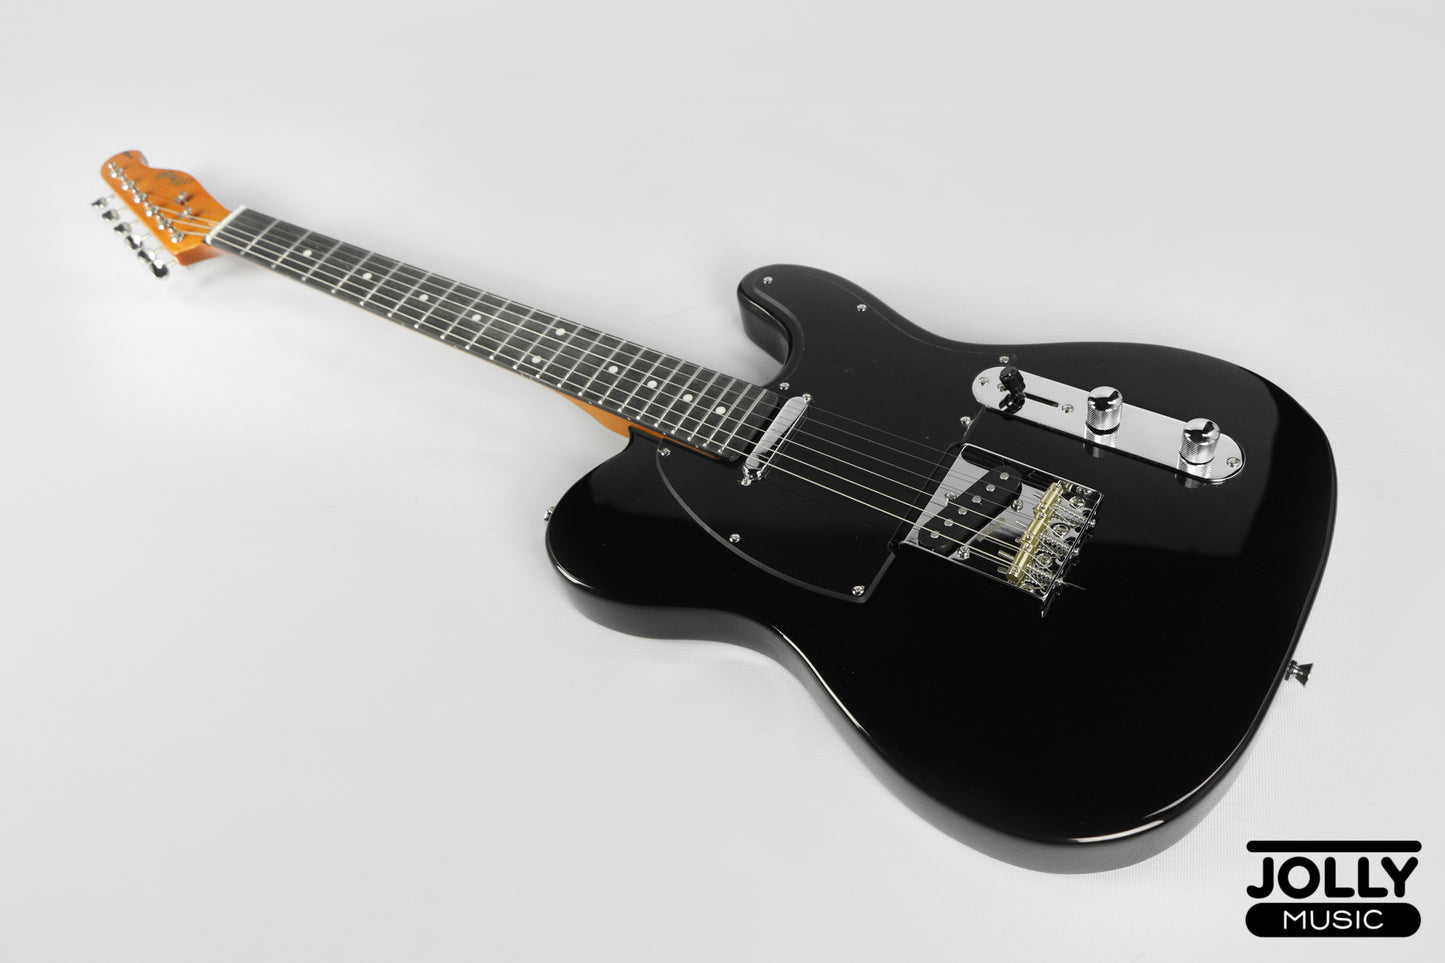 JCraft Vintage Series T-3V T-Style Electric Guitar - Black